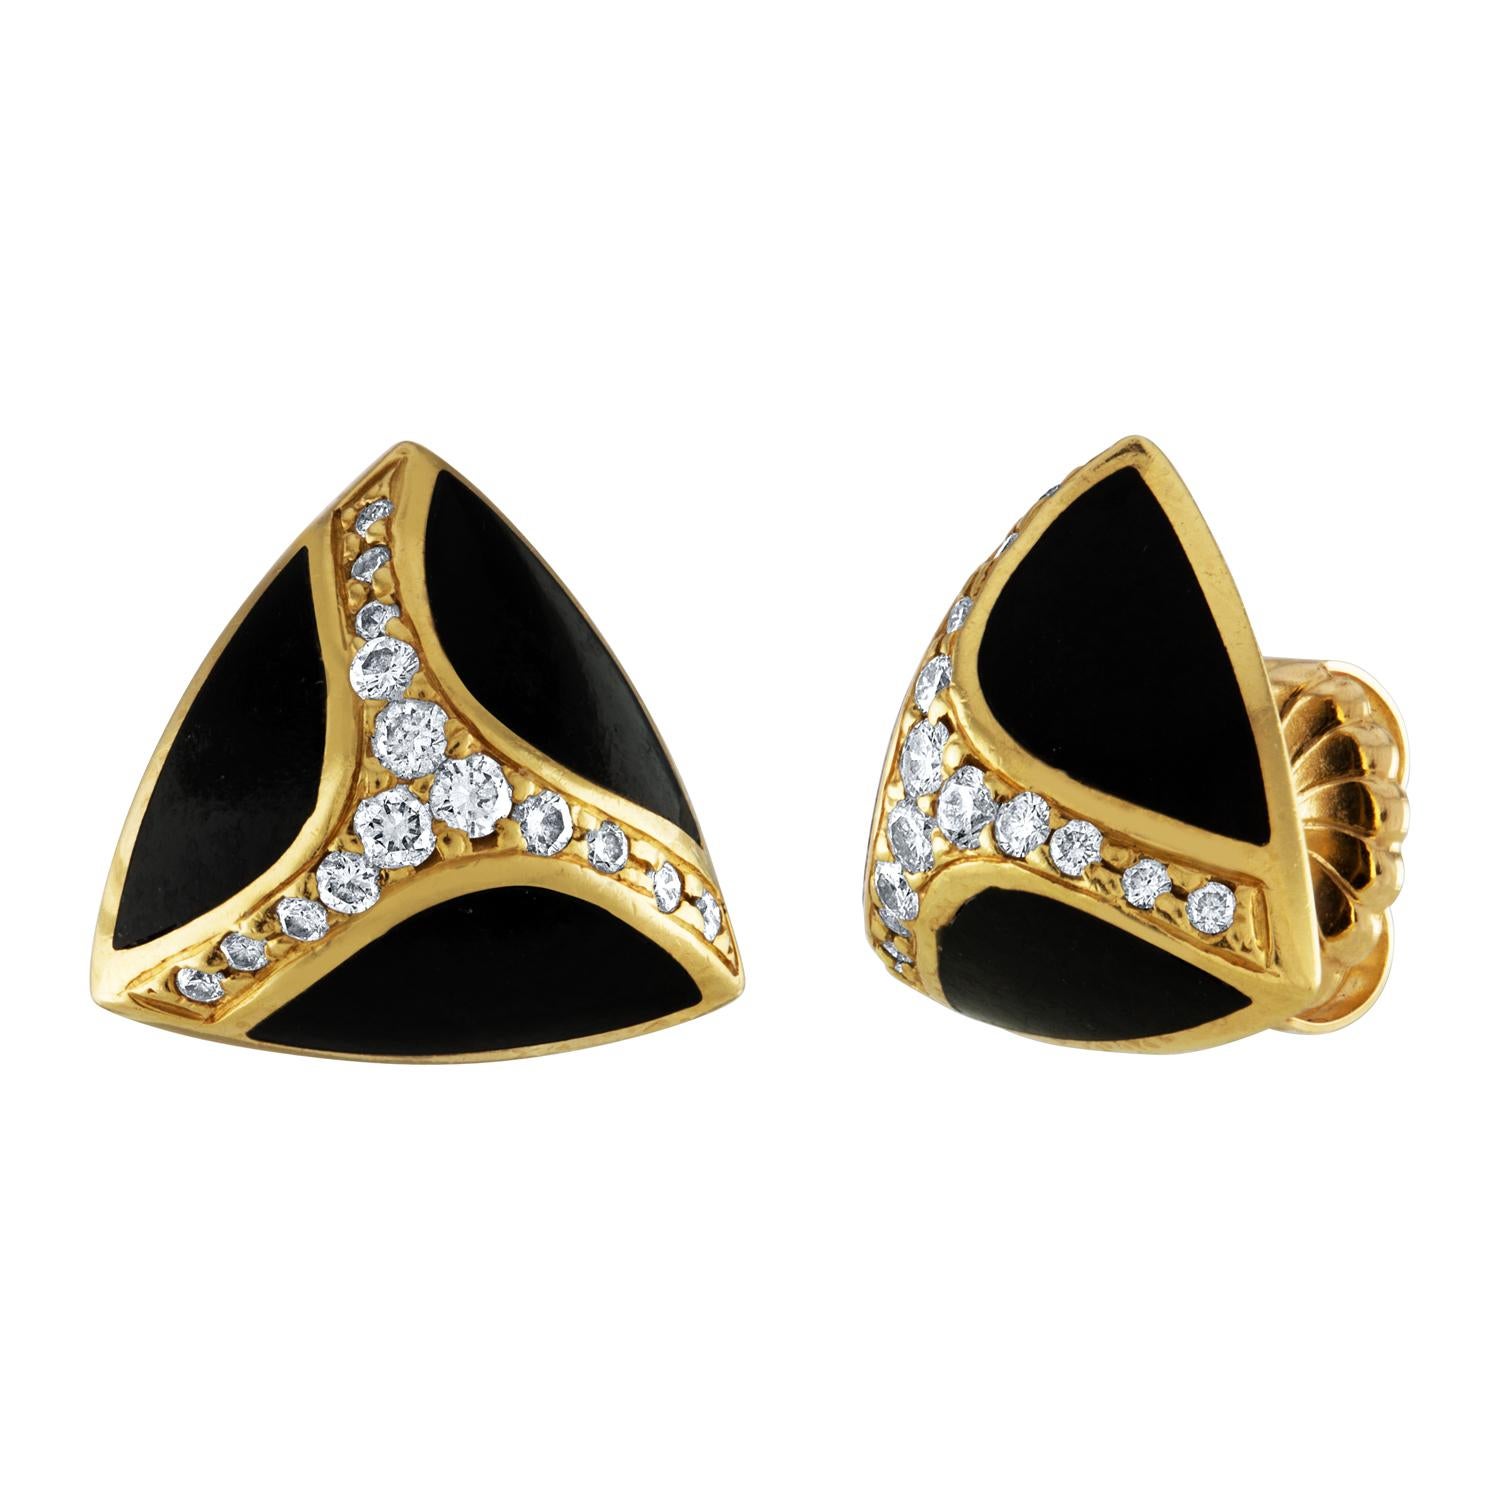 Bernard K. Passman Black Coral and Diamonds Gold Earrings